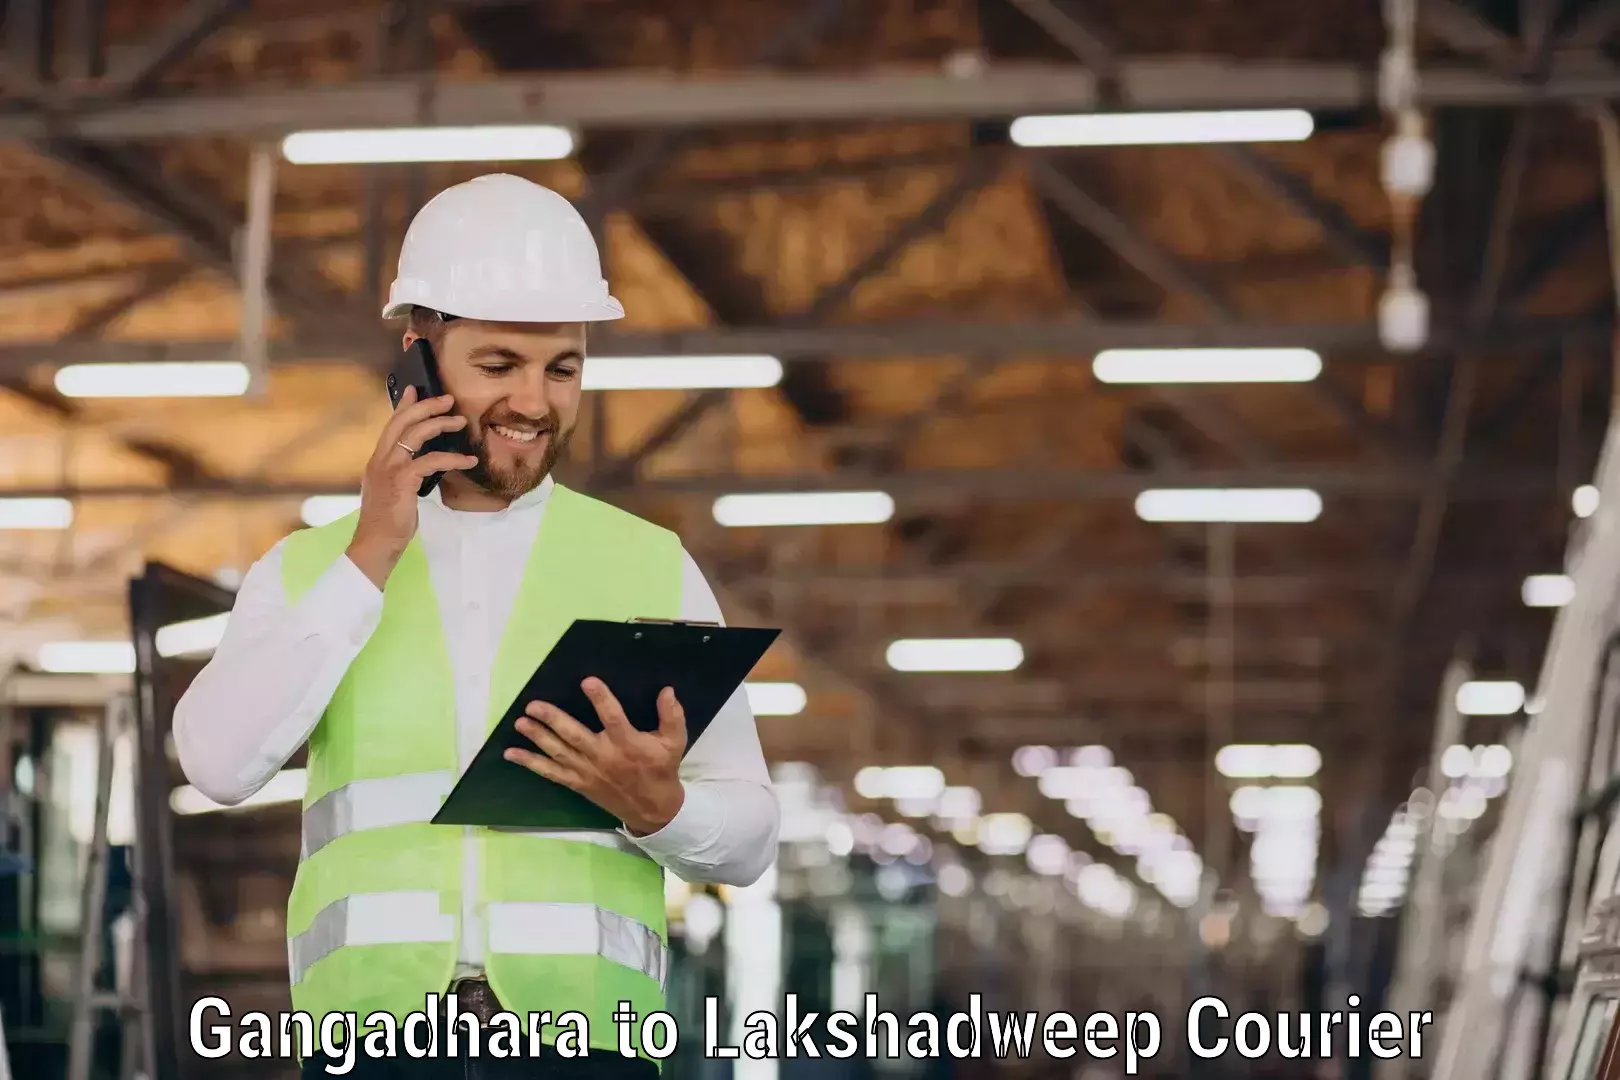 24/7 courier service Gangadhara to Lakshadweep